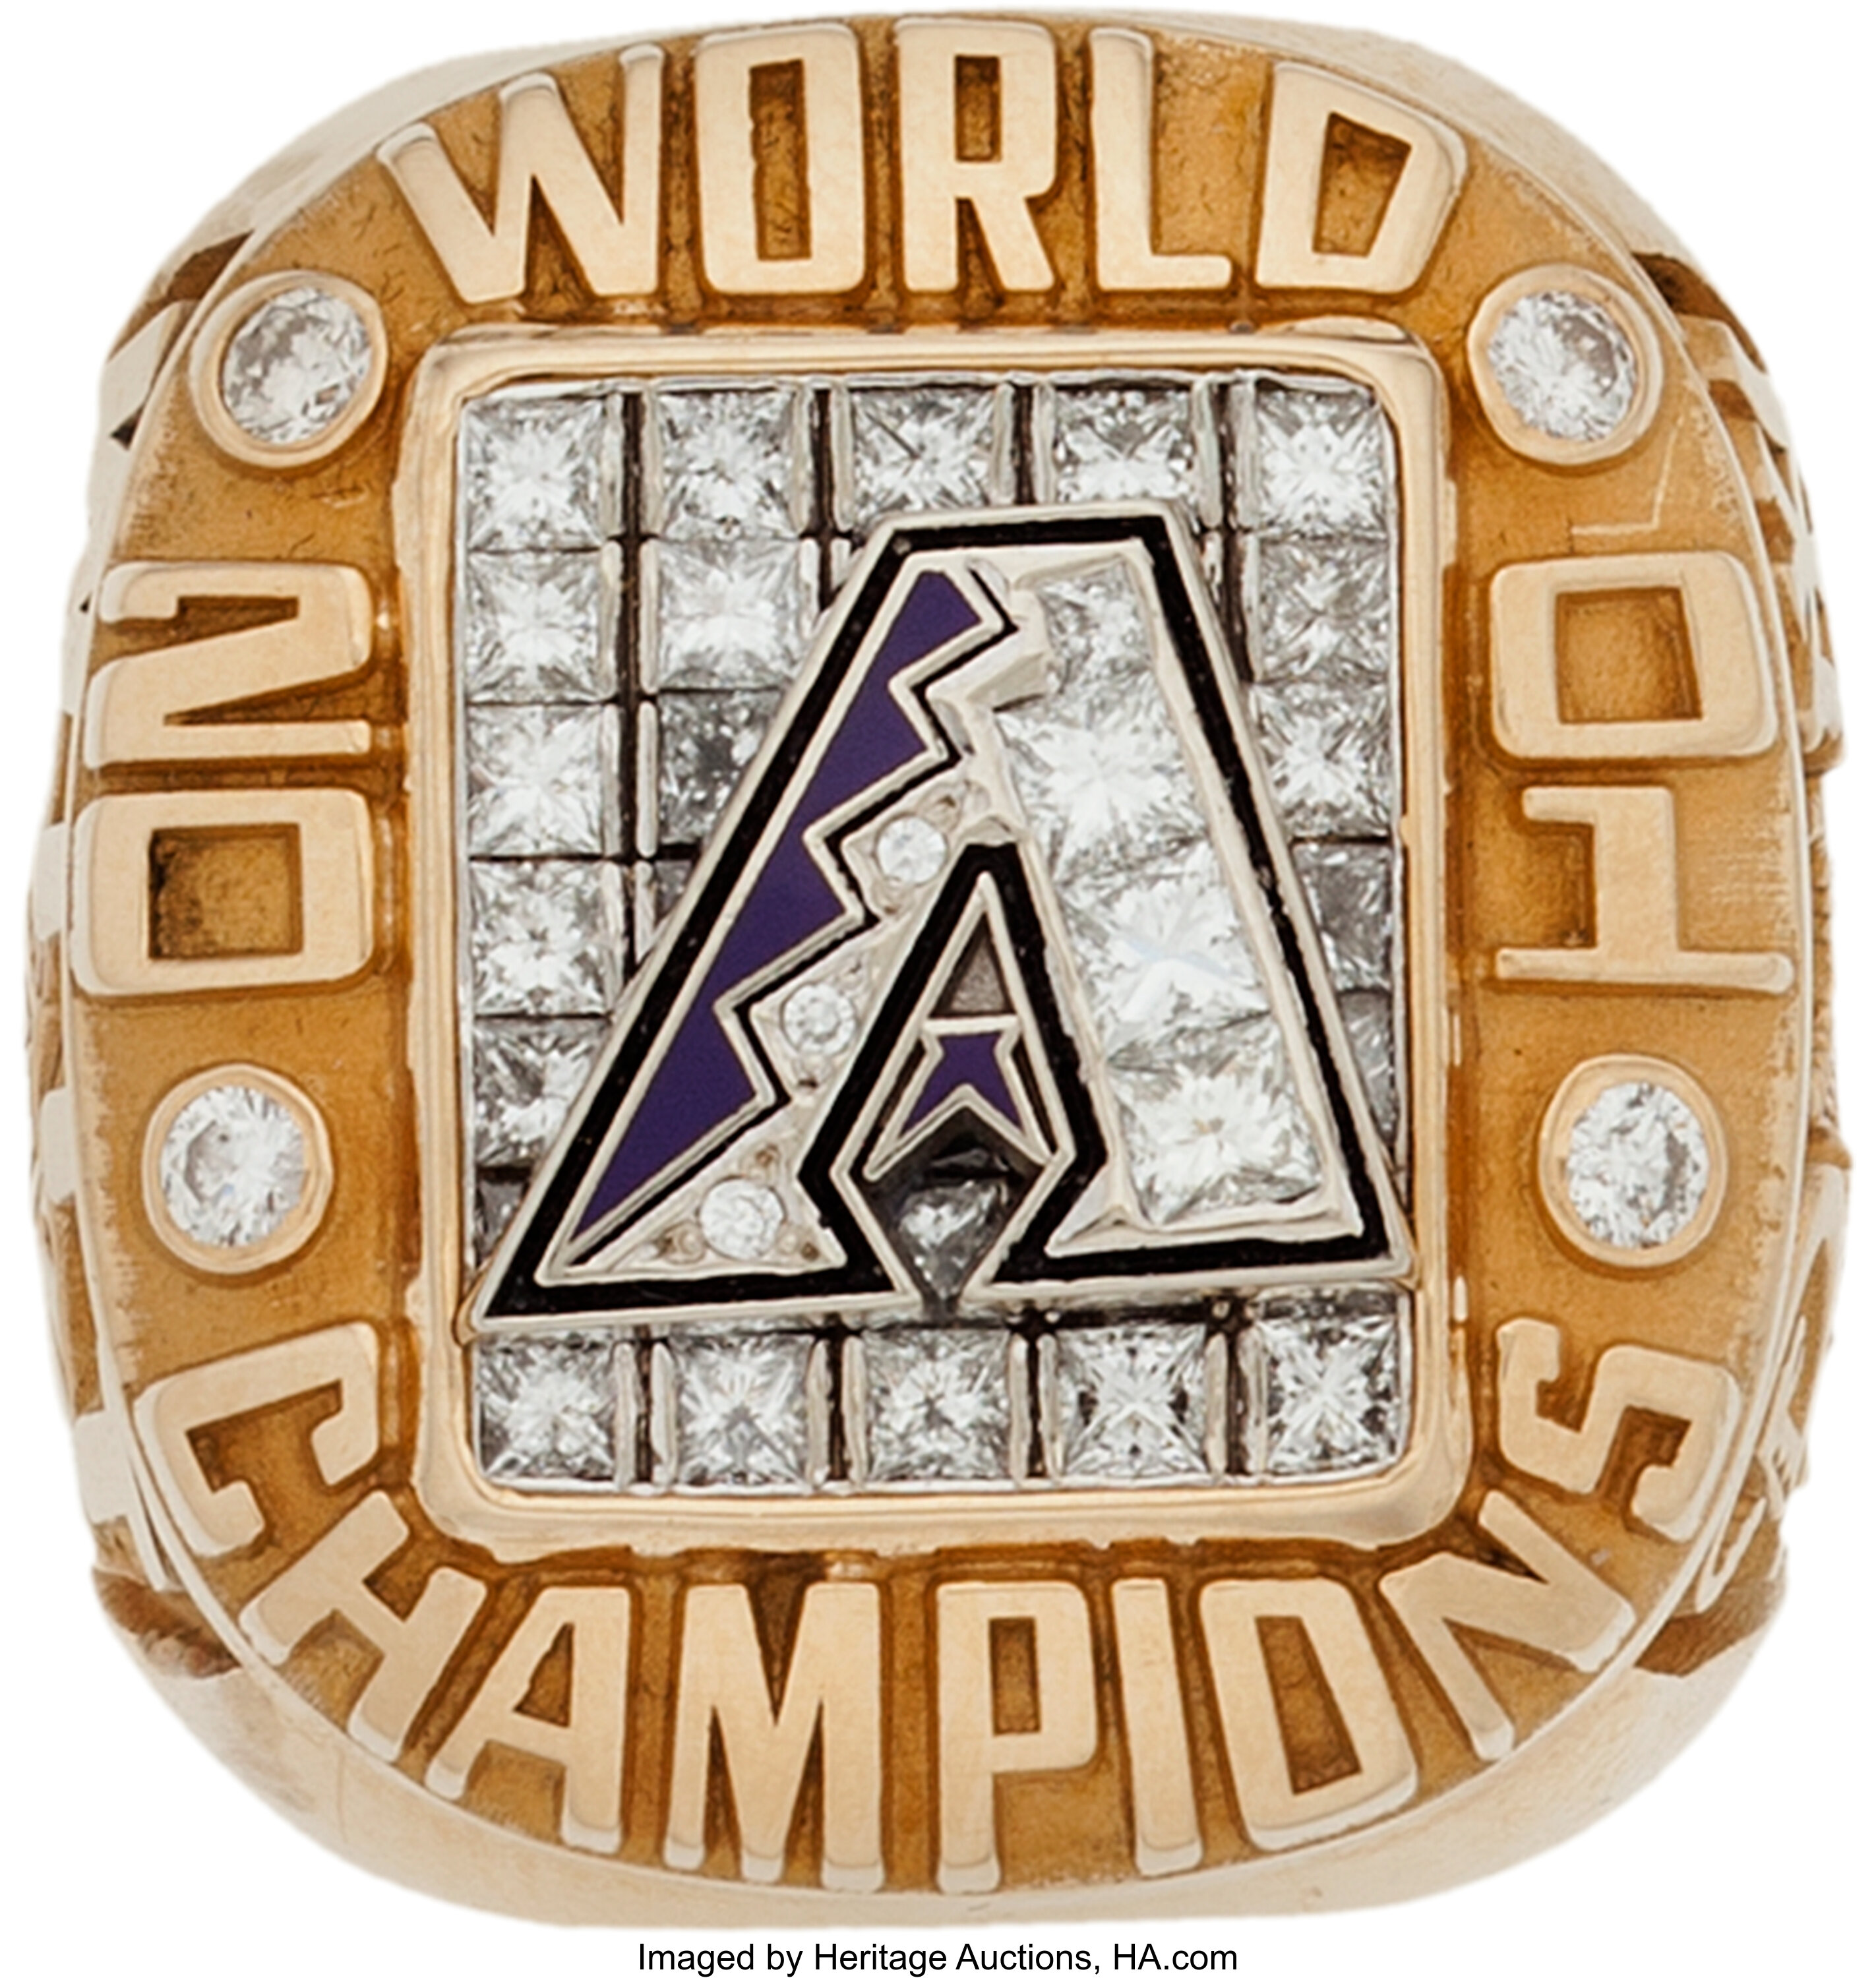 2001 Arizona diamondbacks World series championship ring by